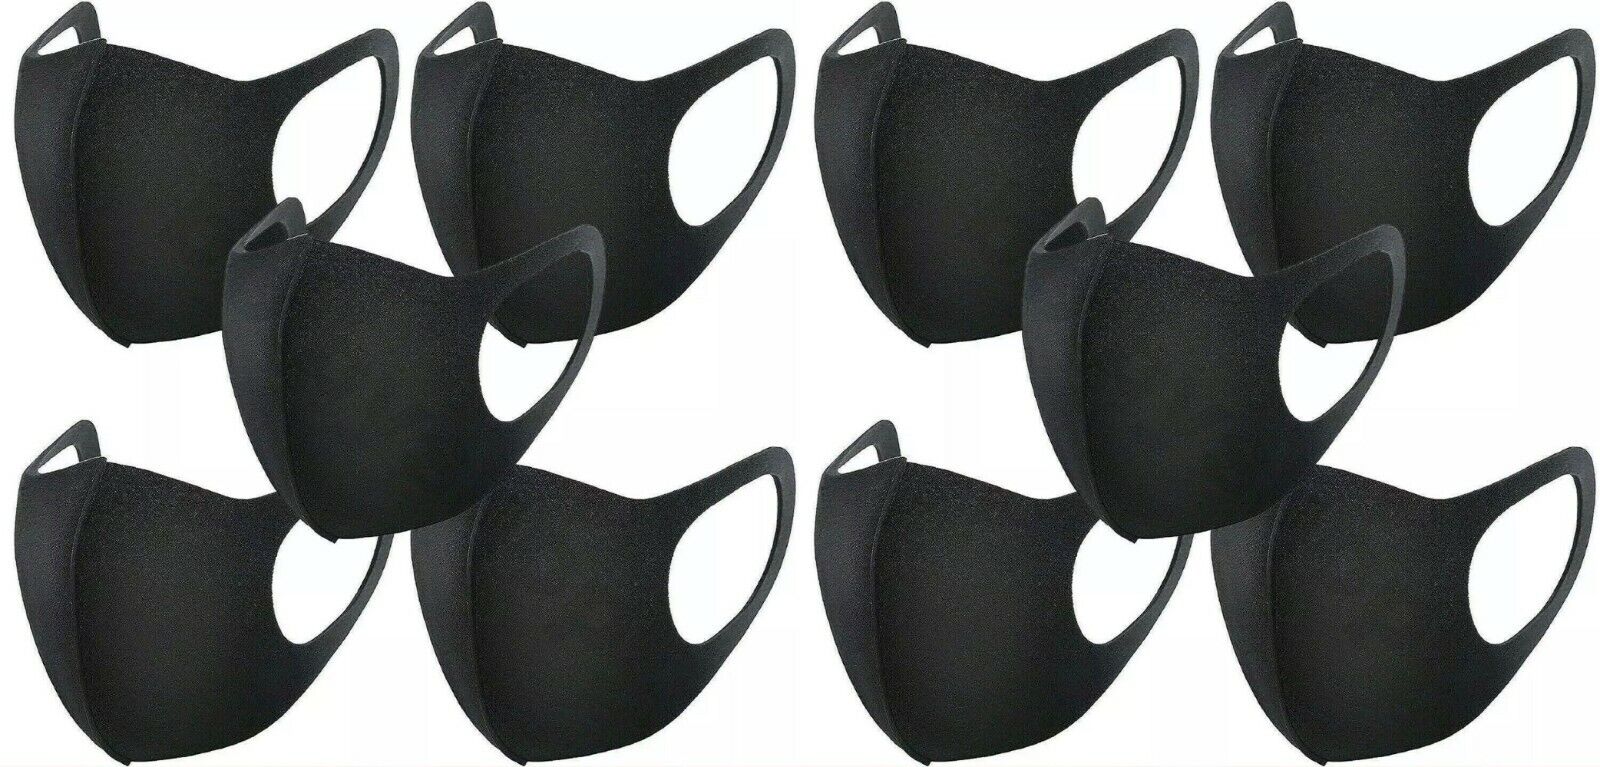 10 Pack Face Mask Black Washable Reusable Breathable Unisex Masks Unbranded Does Not Apply